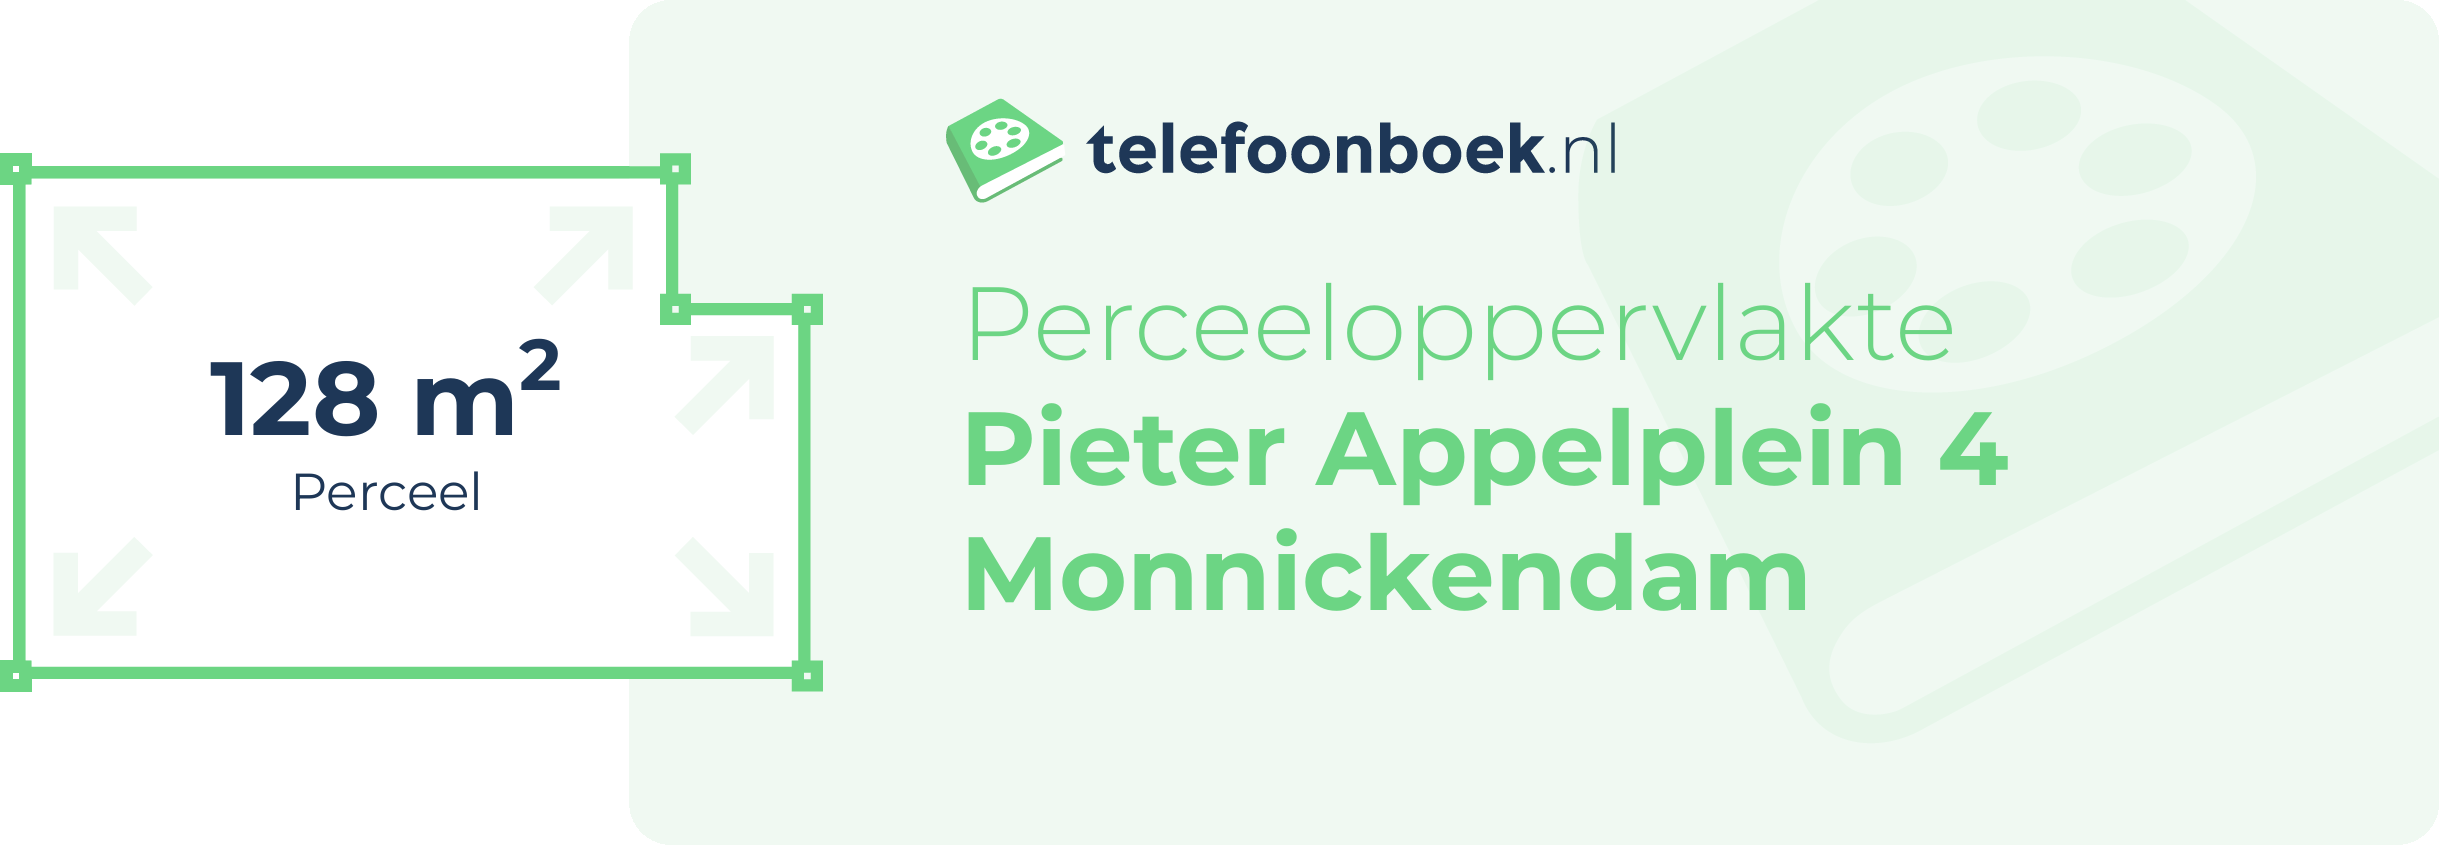 Perceeloppervlakte Pieter Appelplein 4 Monnickendam